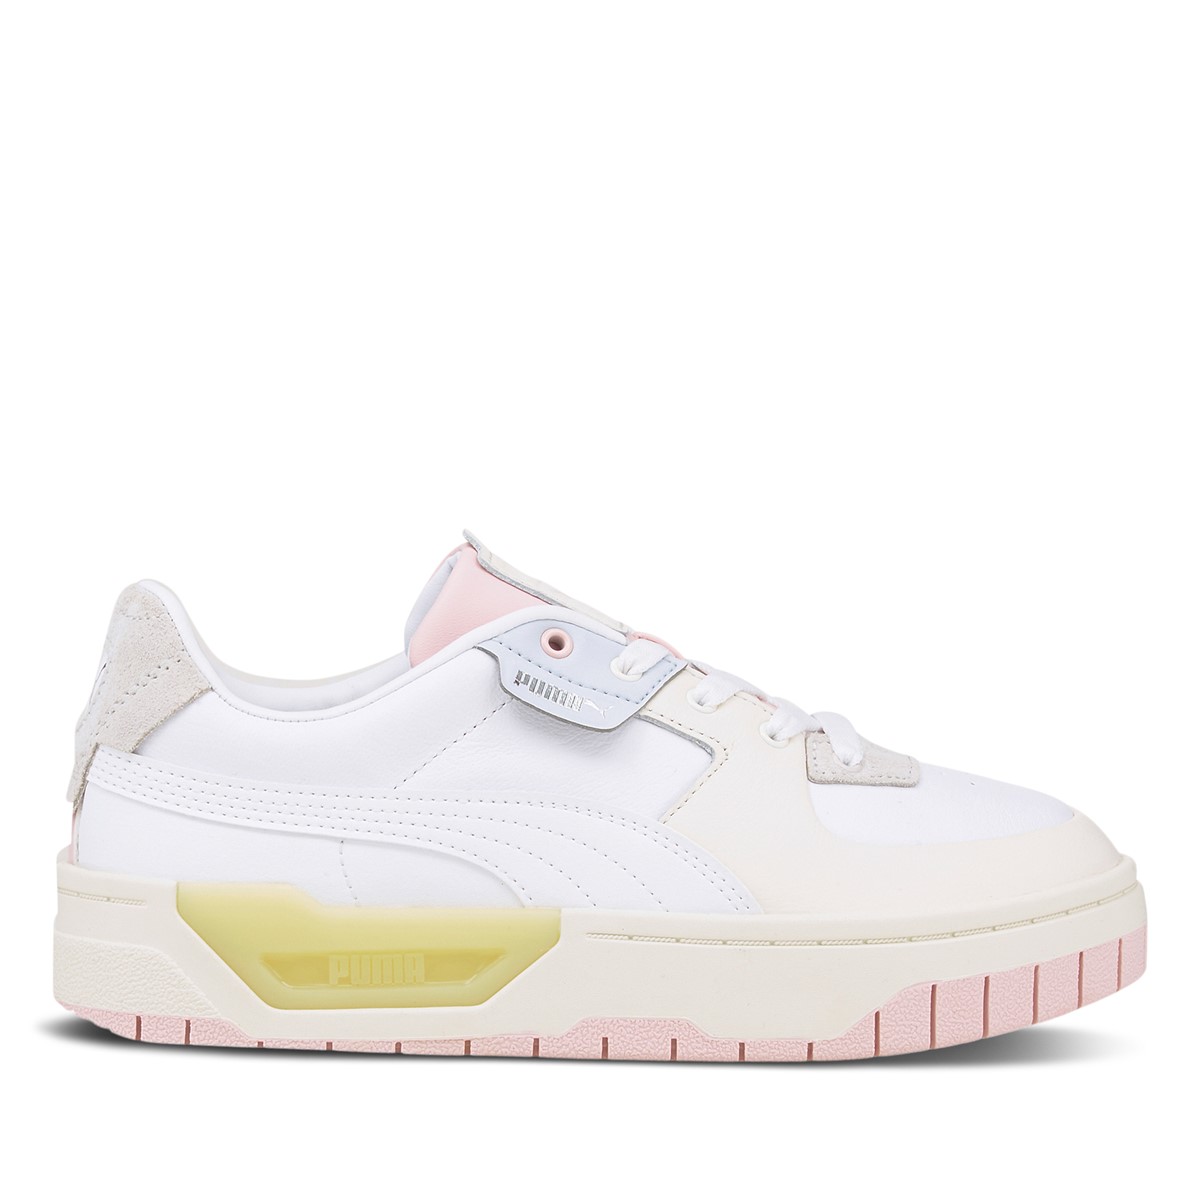 Women's Cali Dream Platform Sneakers in White/Pink/Yellow